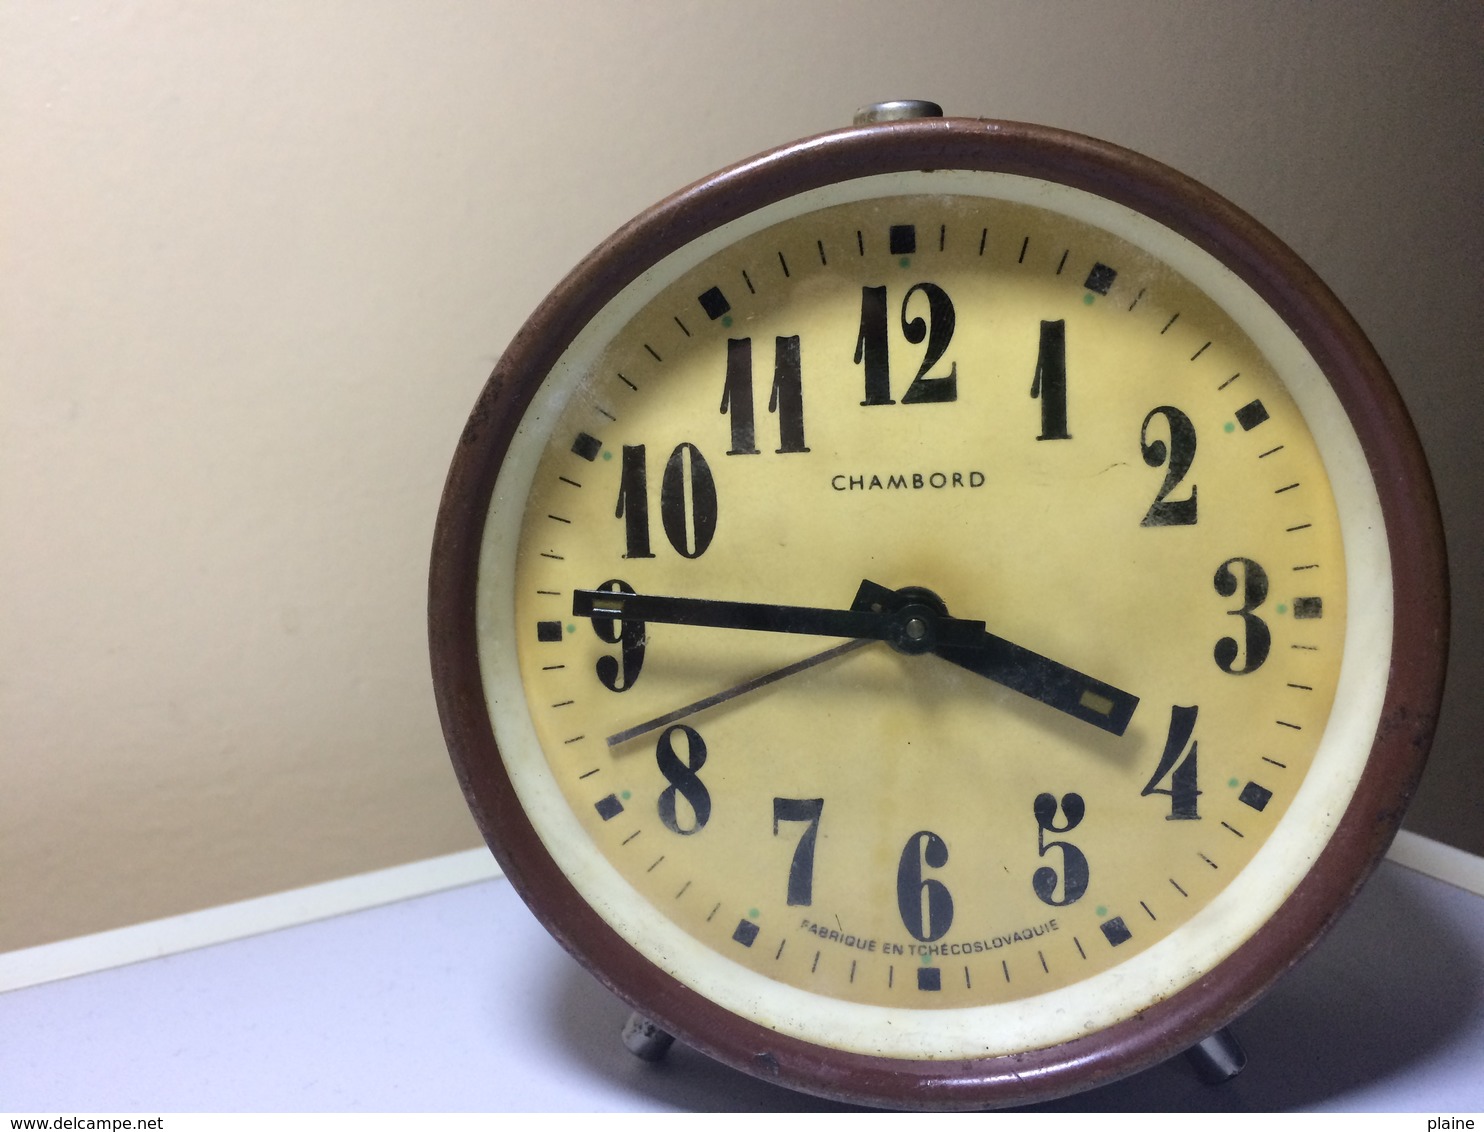 REVEIL CHAMBORD FABRIQUE EN TCHECOSLOVAQUIE - Alarm Clocks